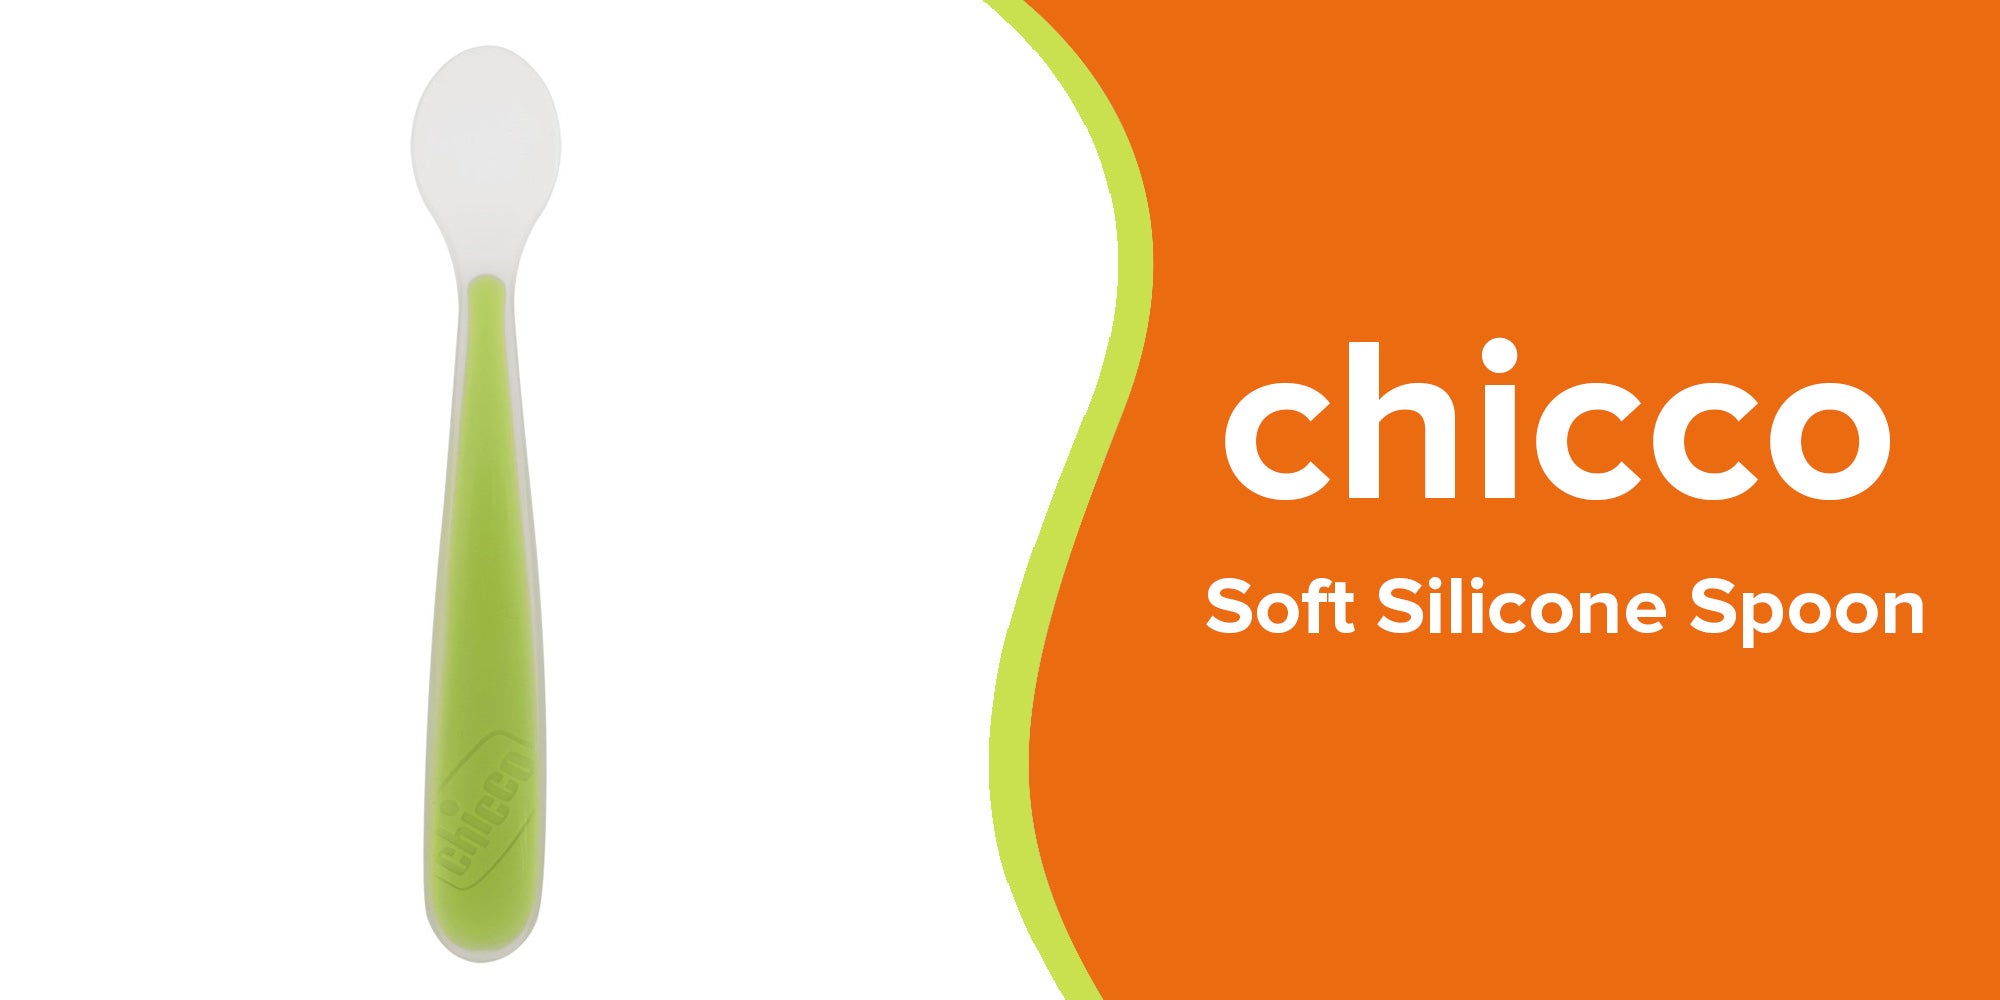 Soft Silicone Spoon Chicco